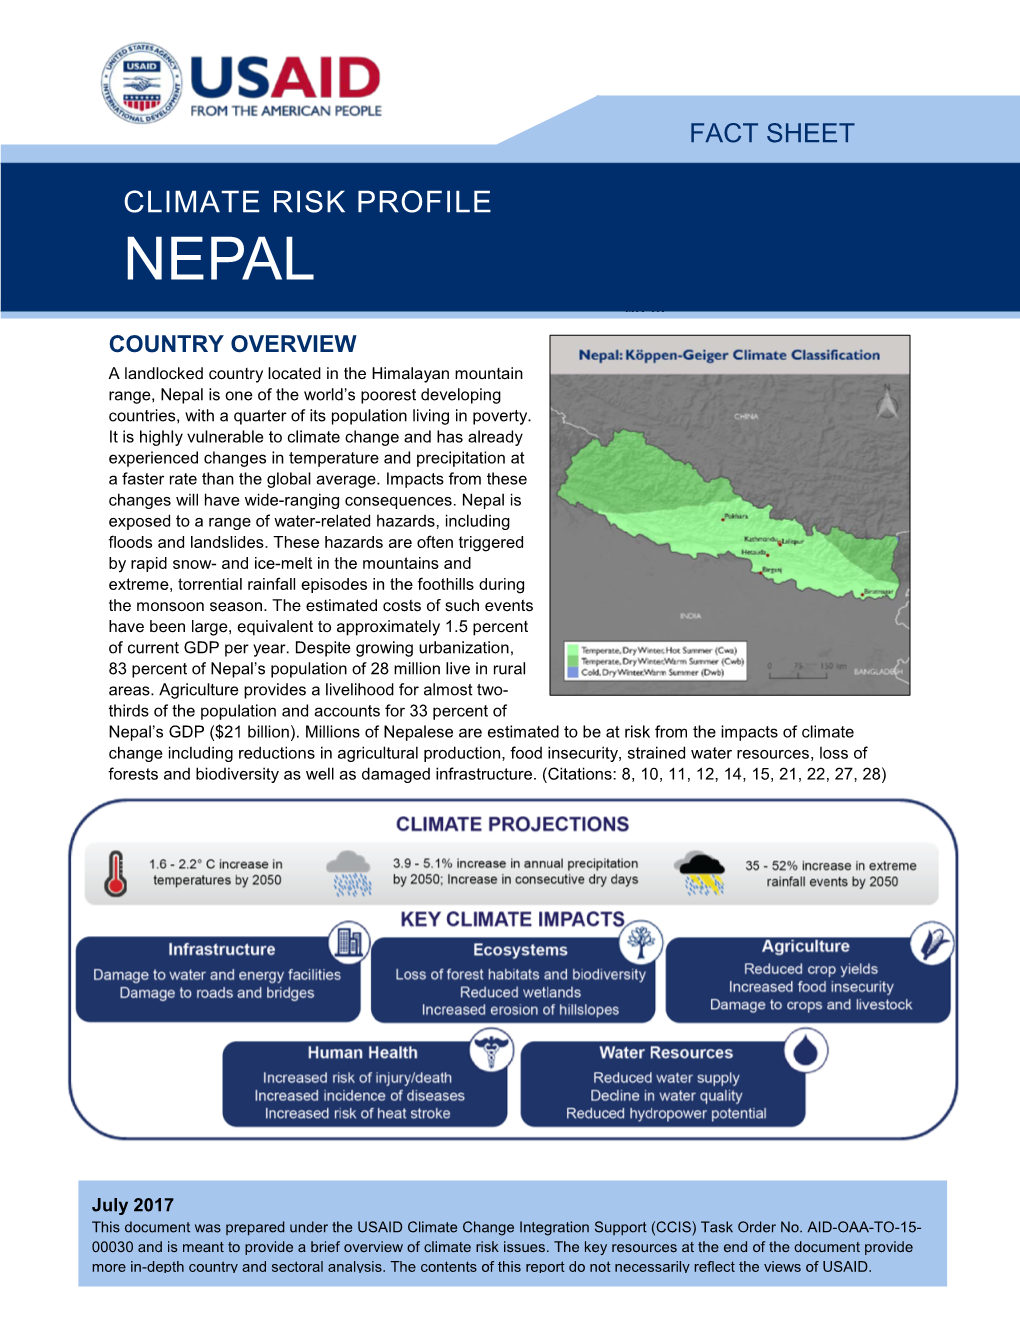 Climate Risk Profile: Nepal